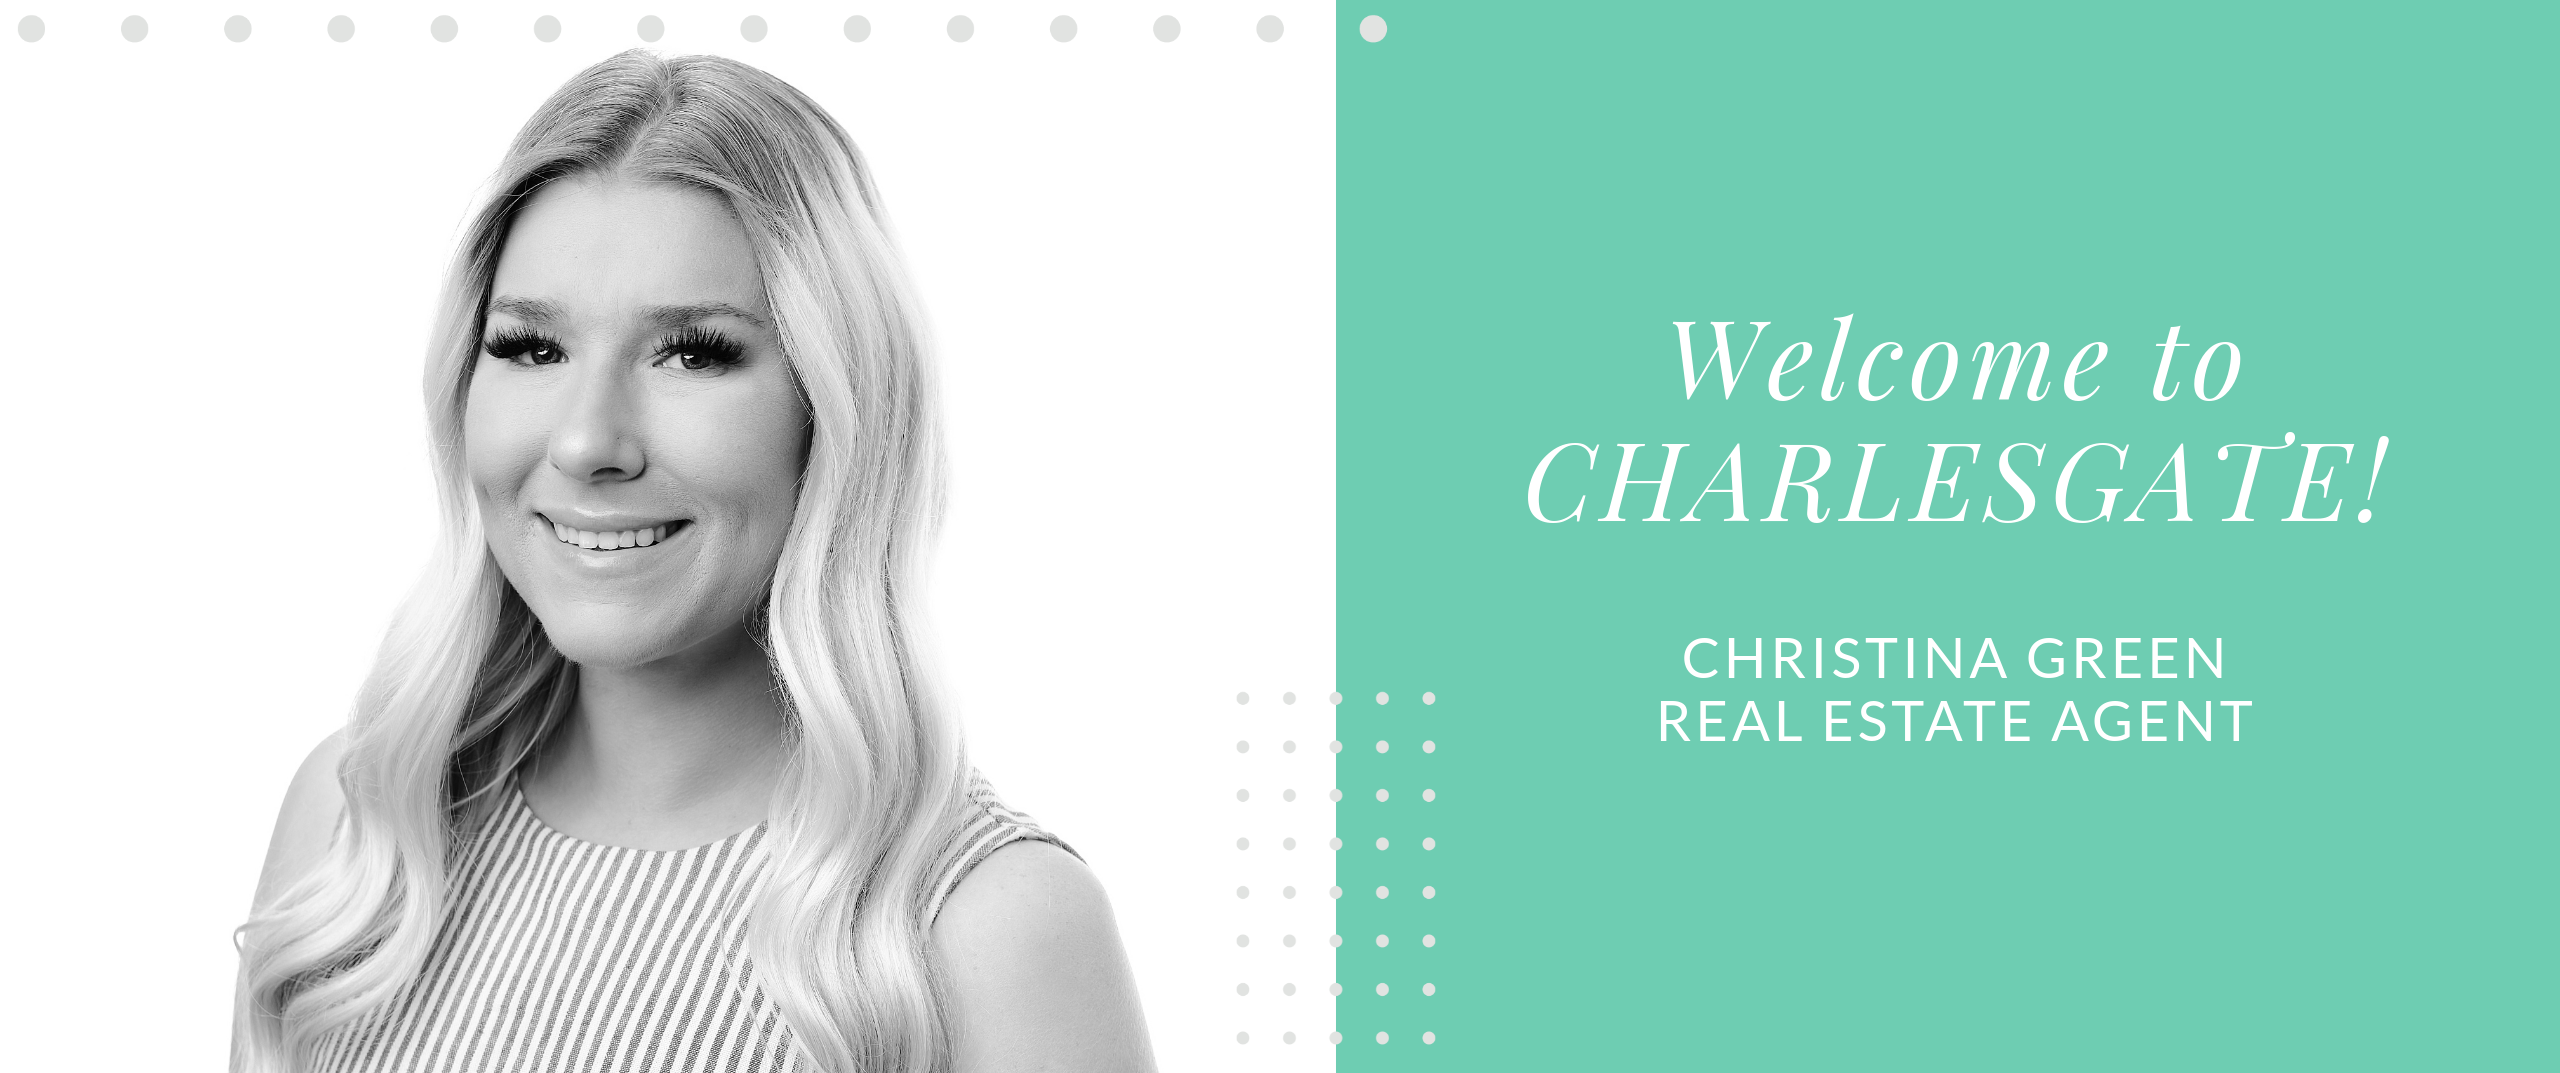 Welcome to CHARLESGATE, Christina Green!